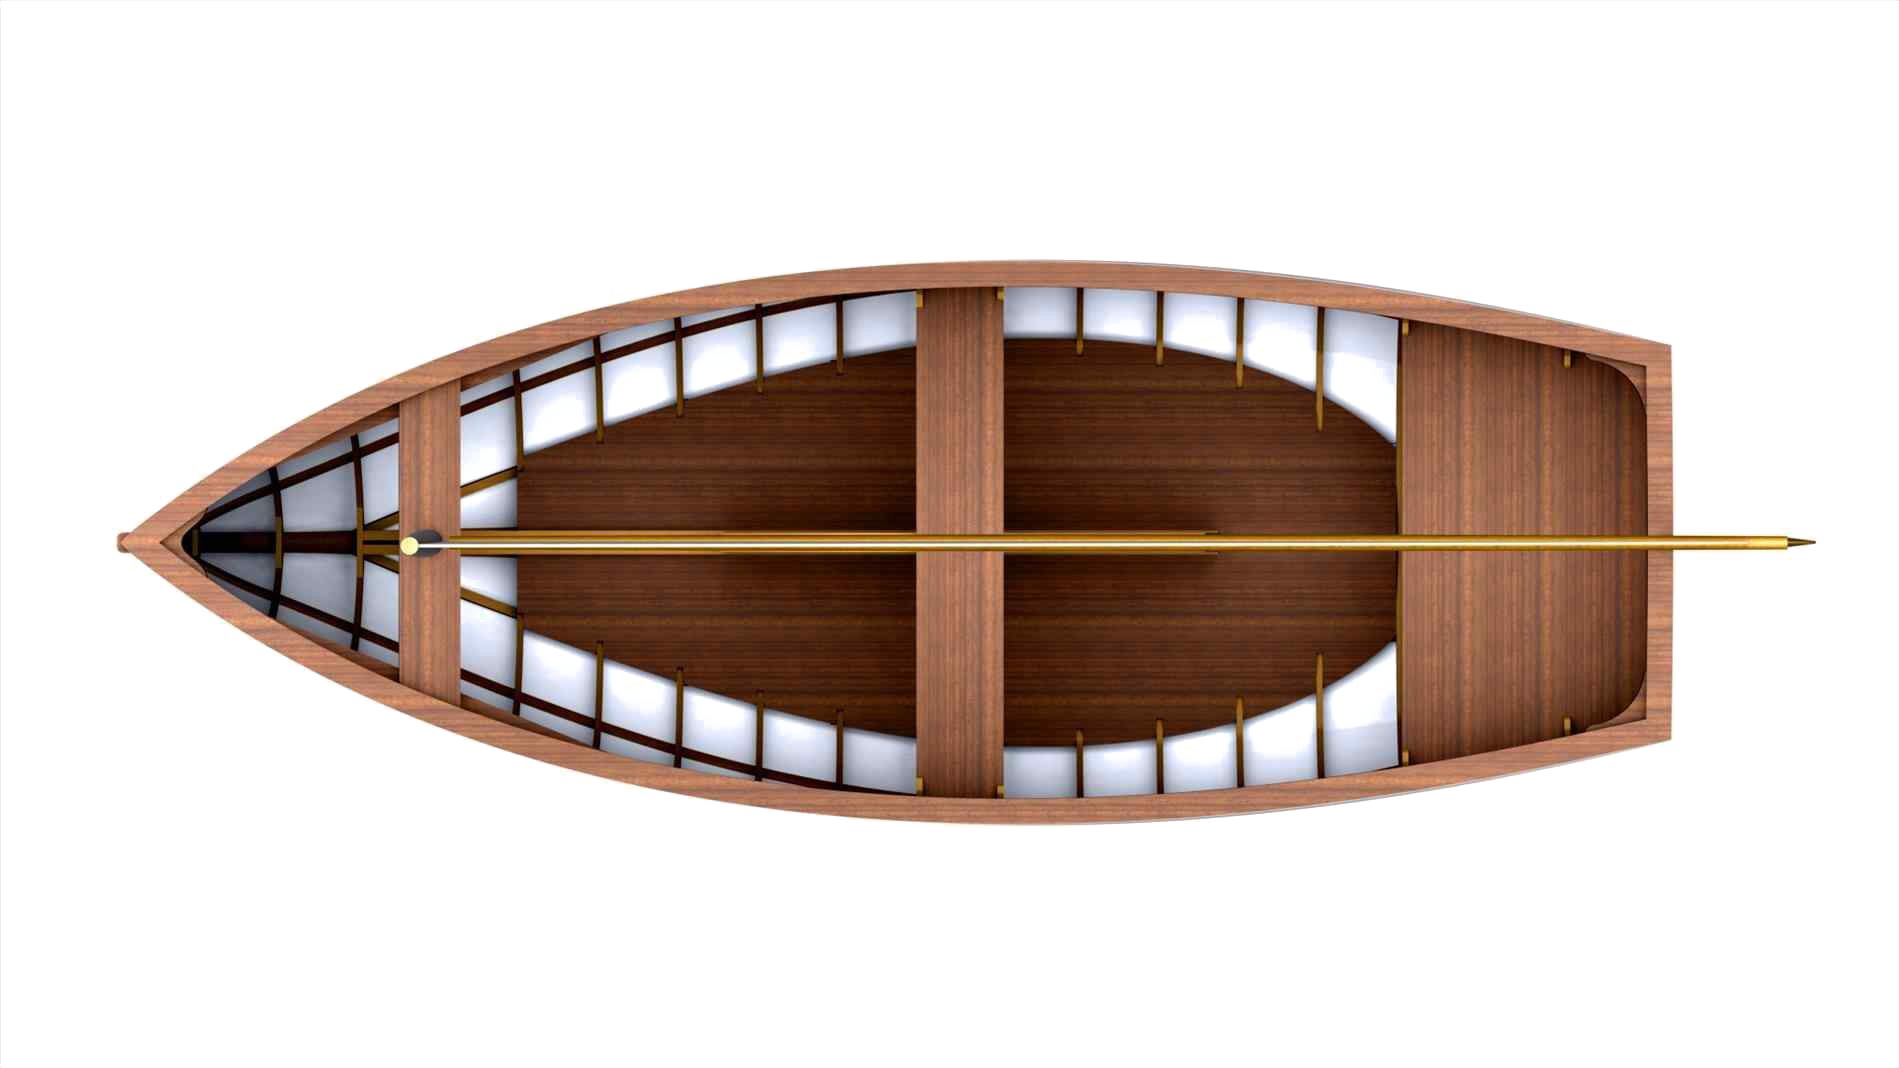 Immagine di PNG gratuita per barca in legno